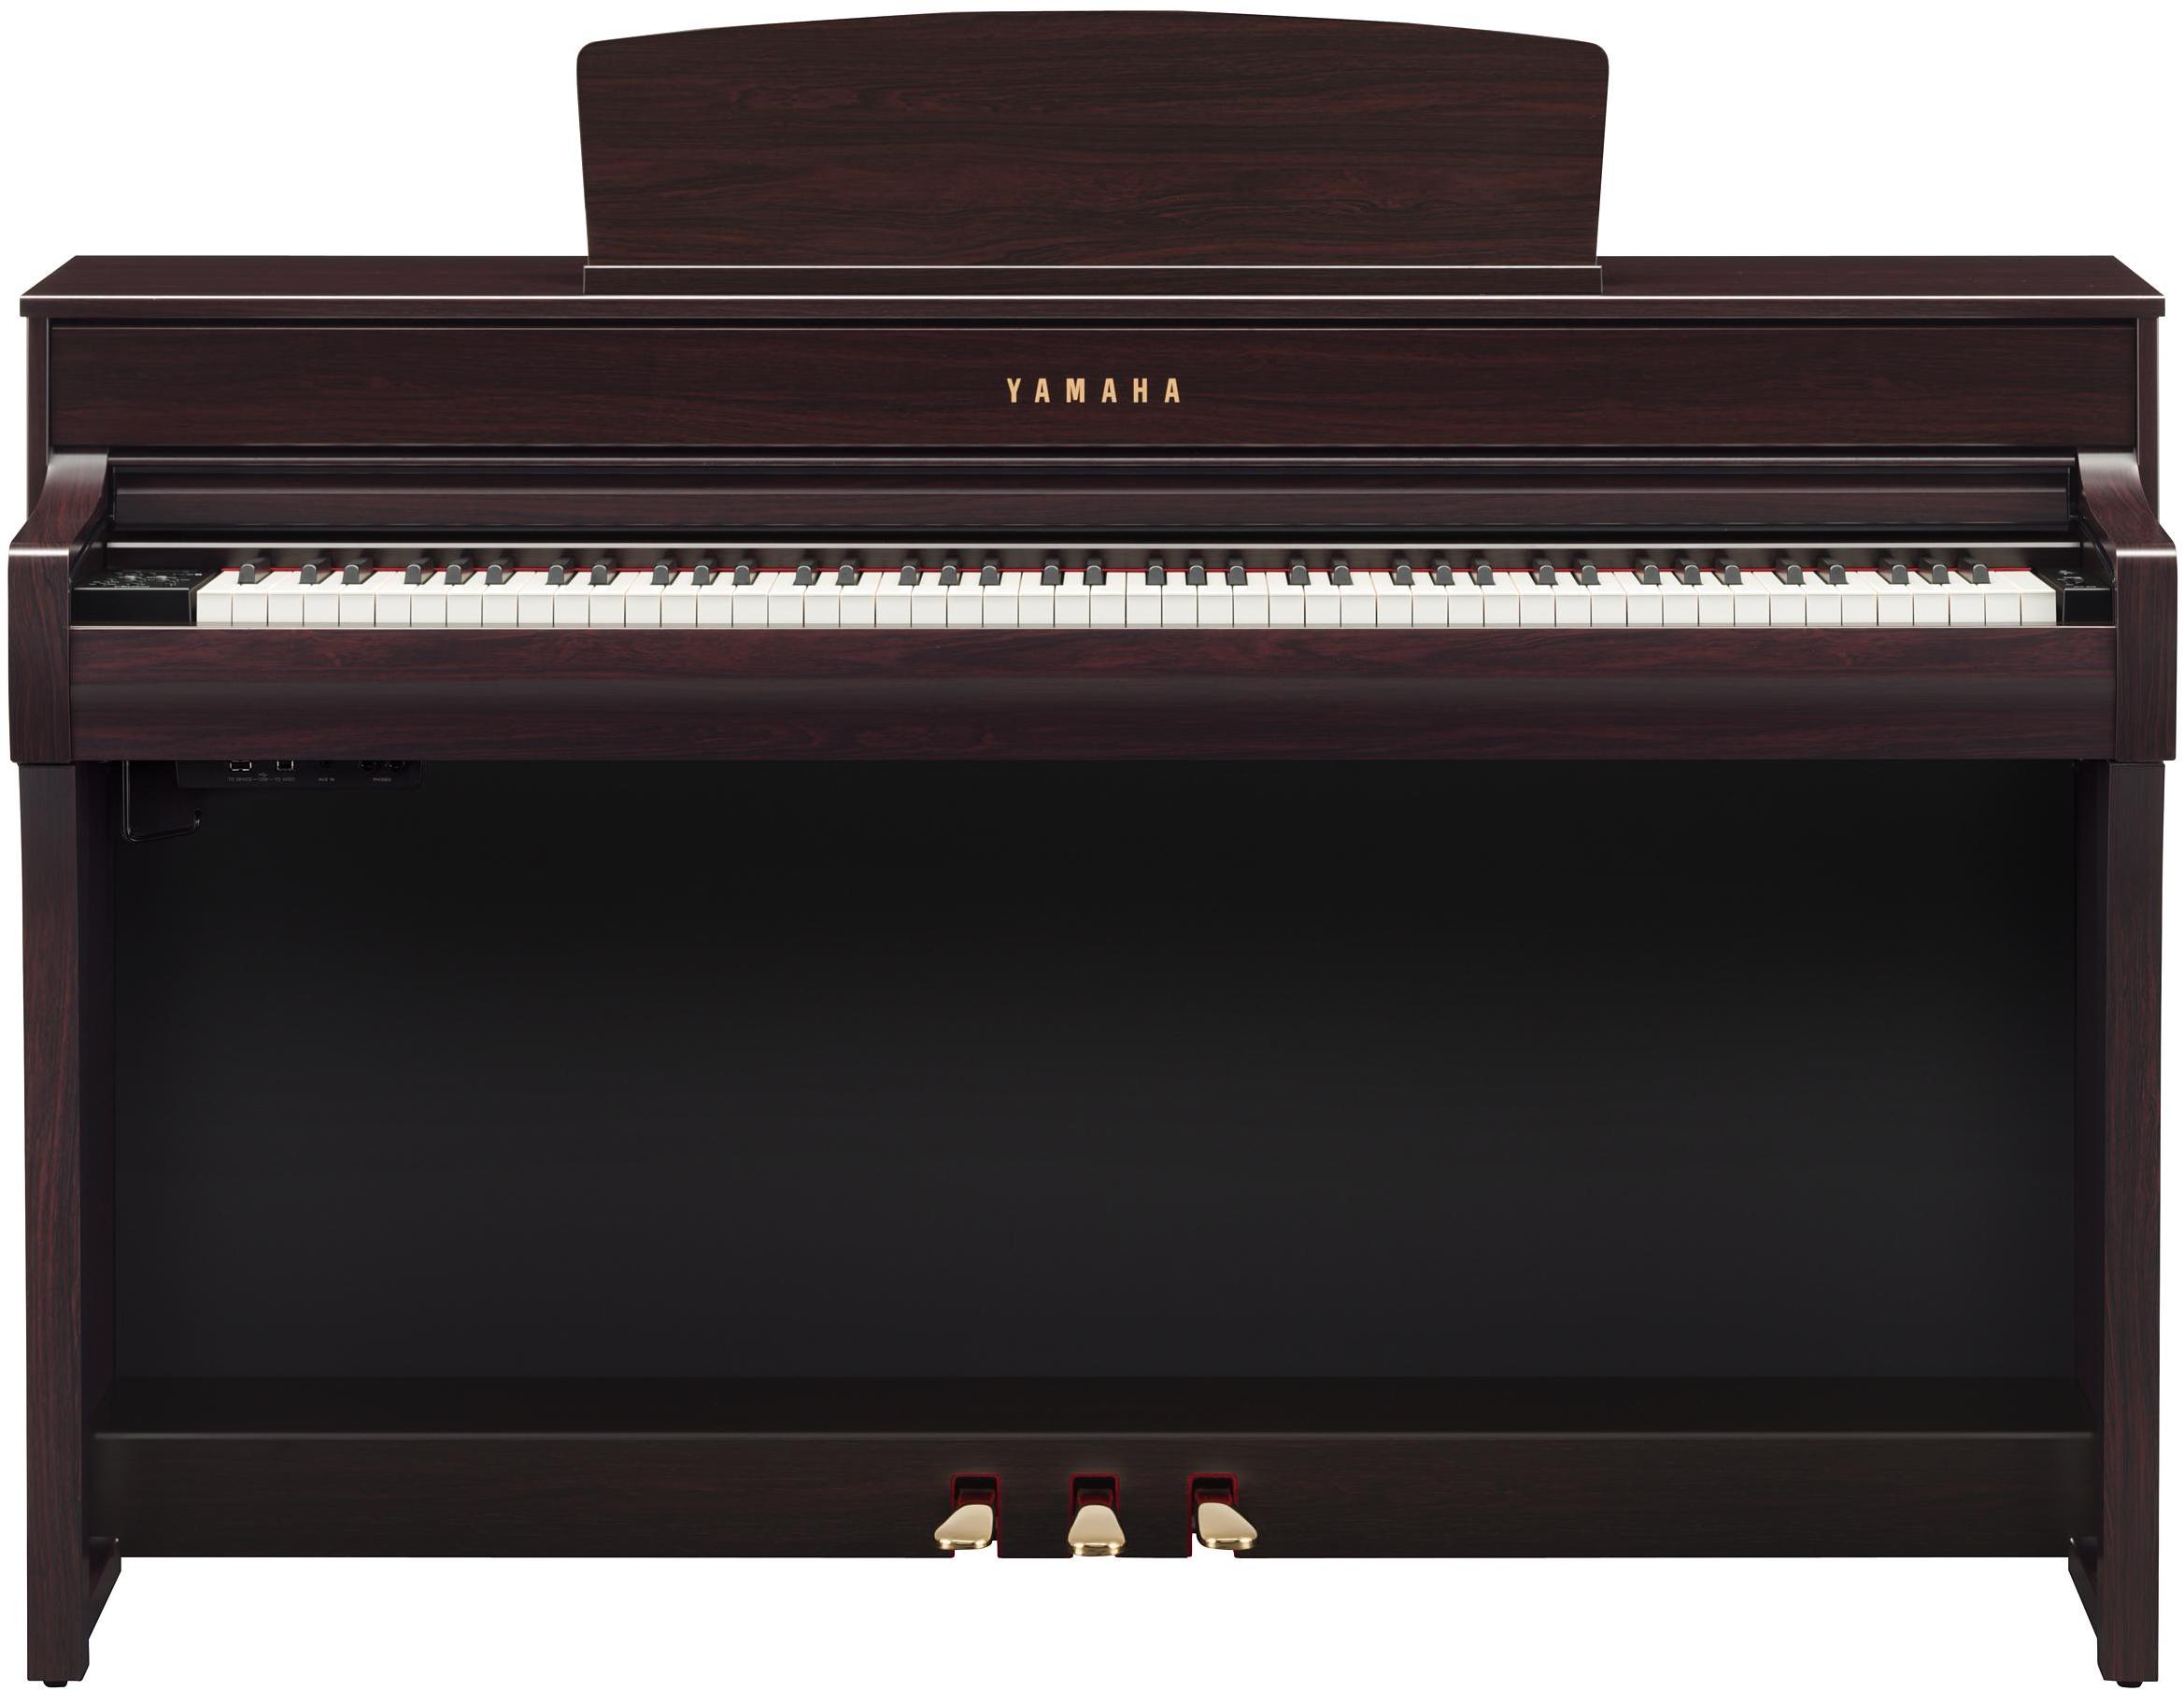 Digitalpiano mit stand Yamaha CLP745R